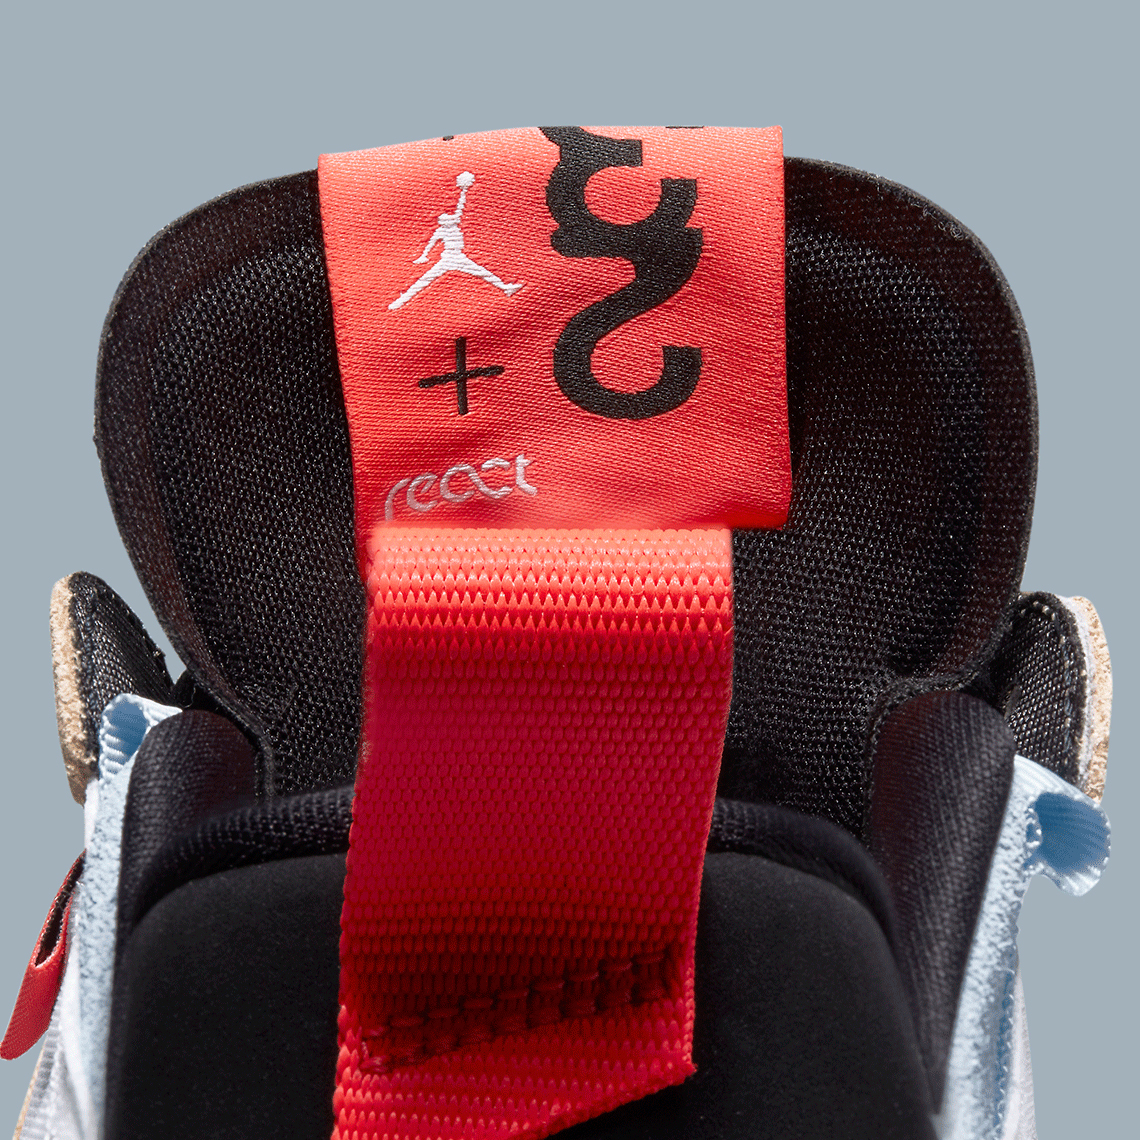 Michael Jordan in the Air Jordan 7 Bordeaux Still captured via ESPN Cv8121 100 Release Info 8